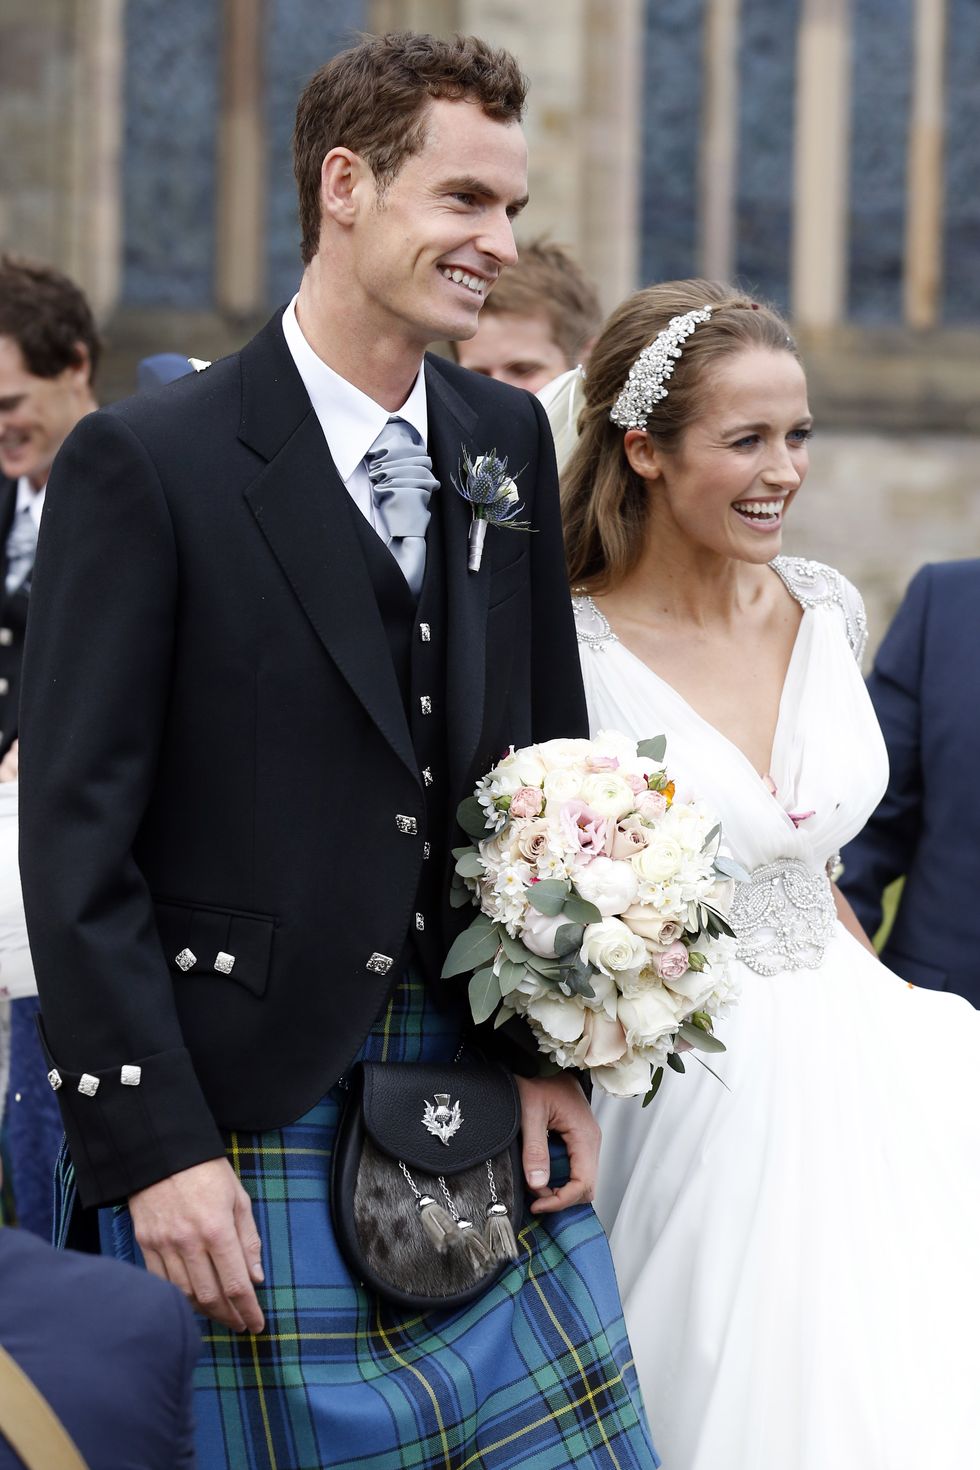 The Wedding Of Andy Murray And Kim Sears